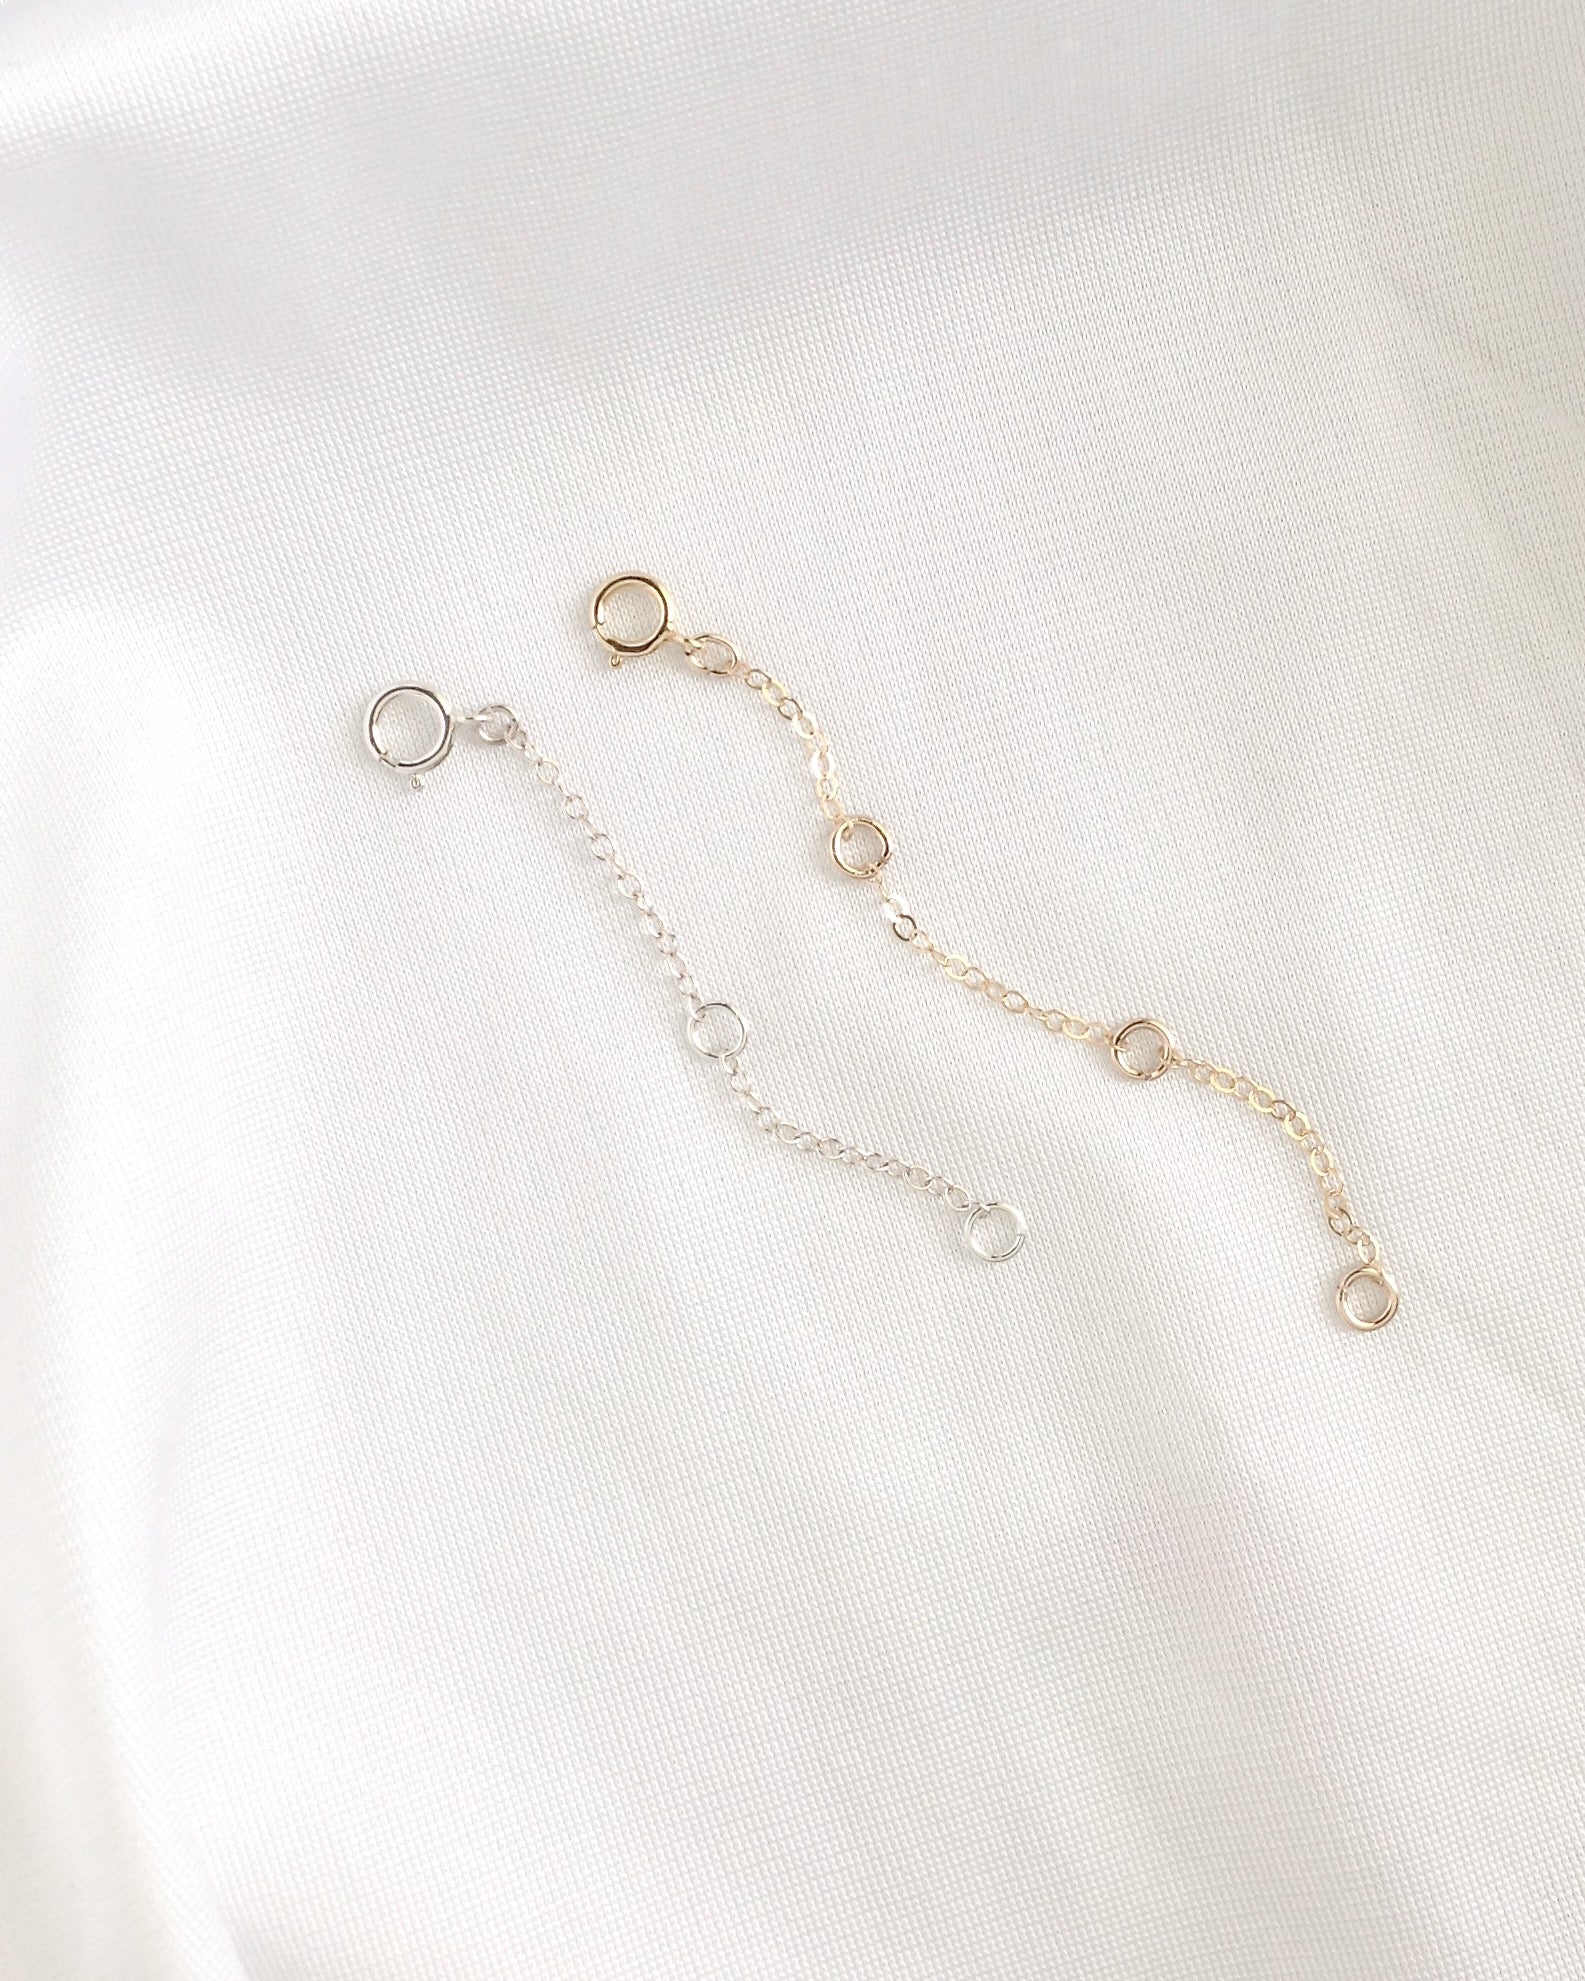 Necklace Extender, Bracelet Extender, Adjustable Length Chain